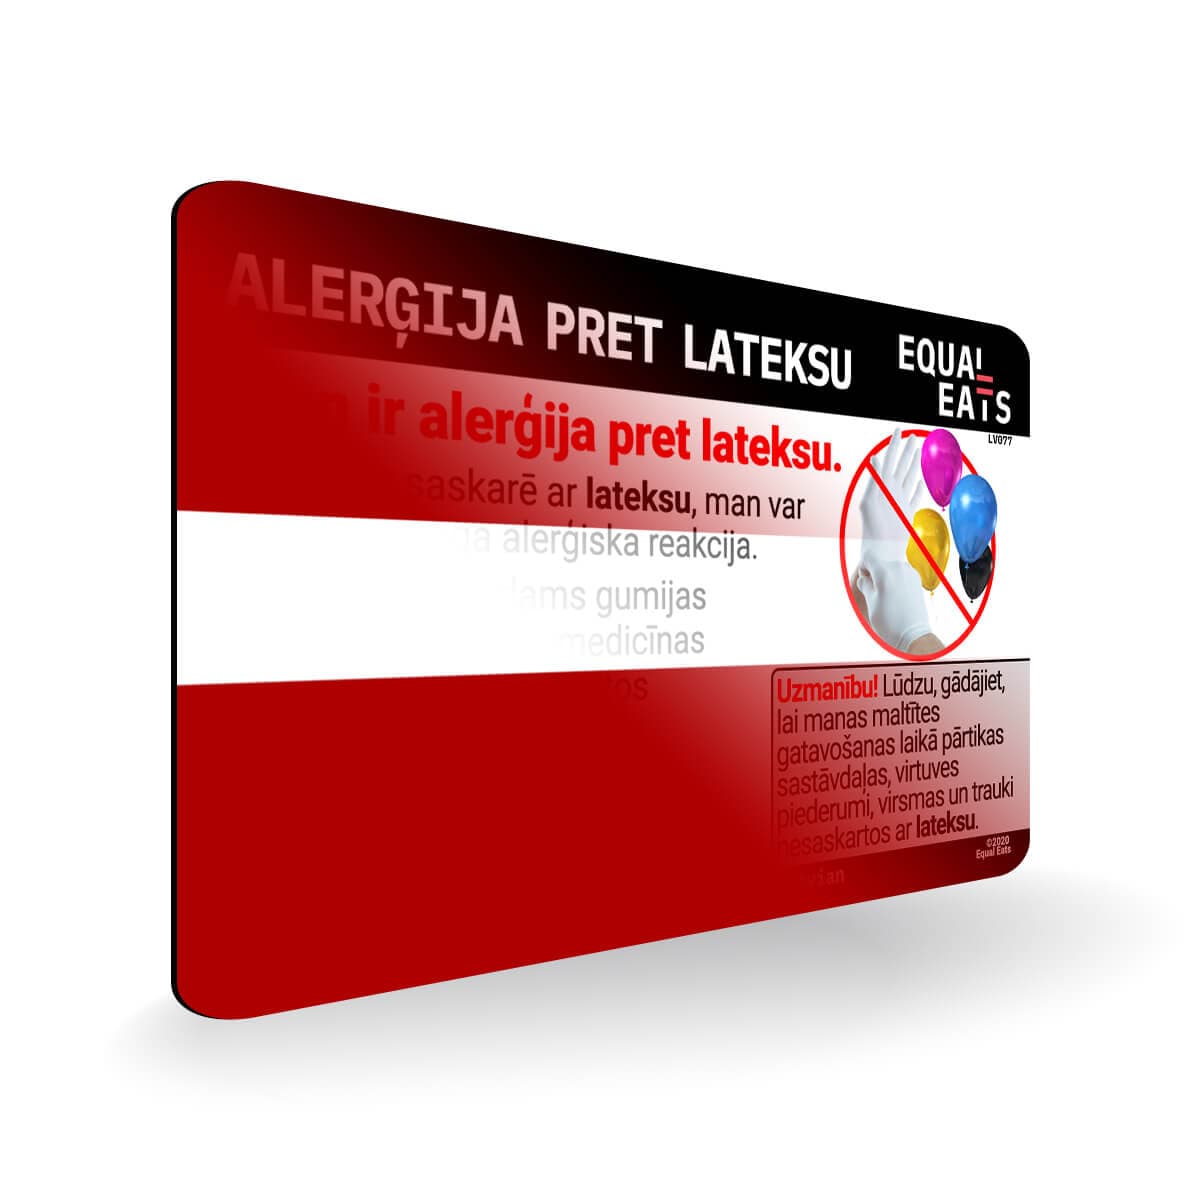 Latex Allergy in Latvian. Latex Allergy Travel Card for Latvia